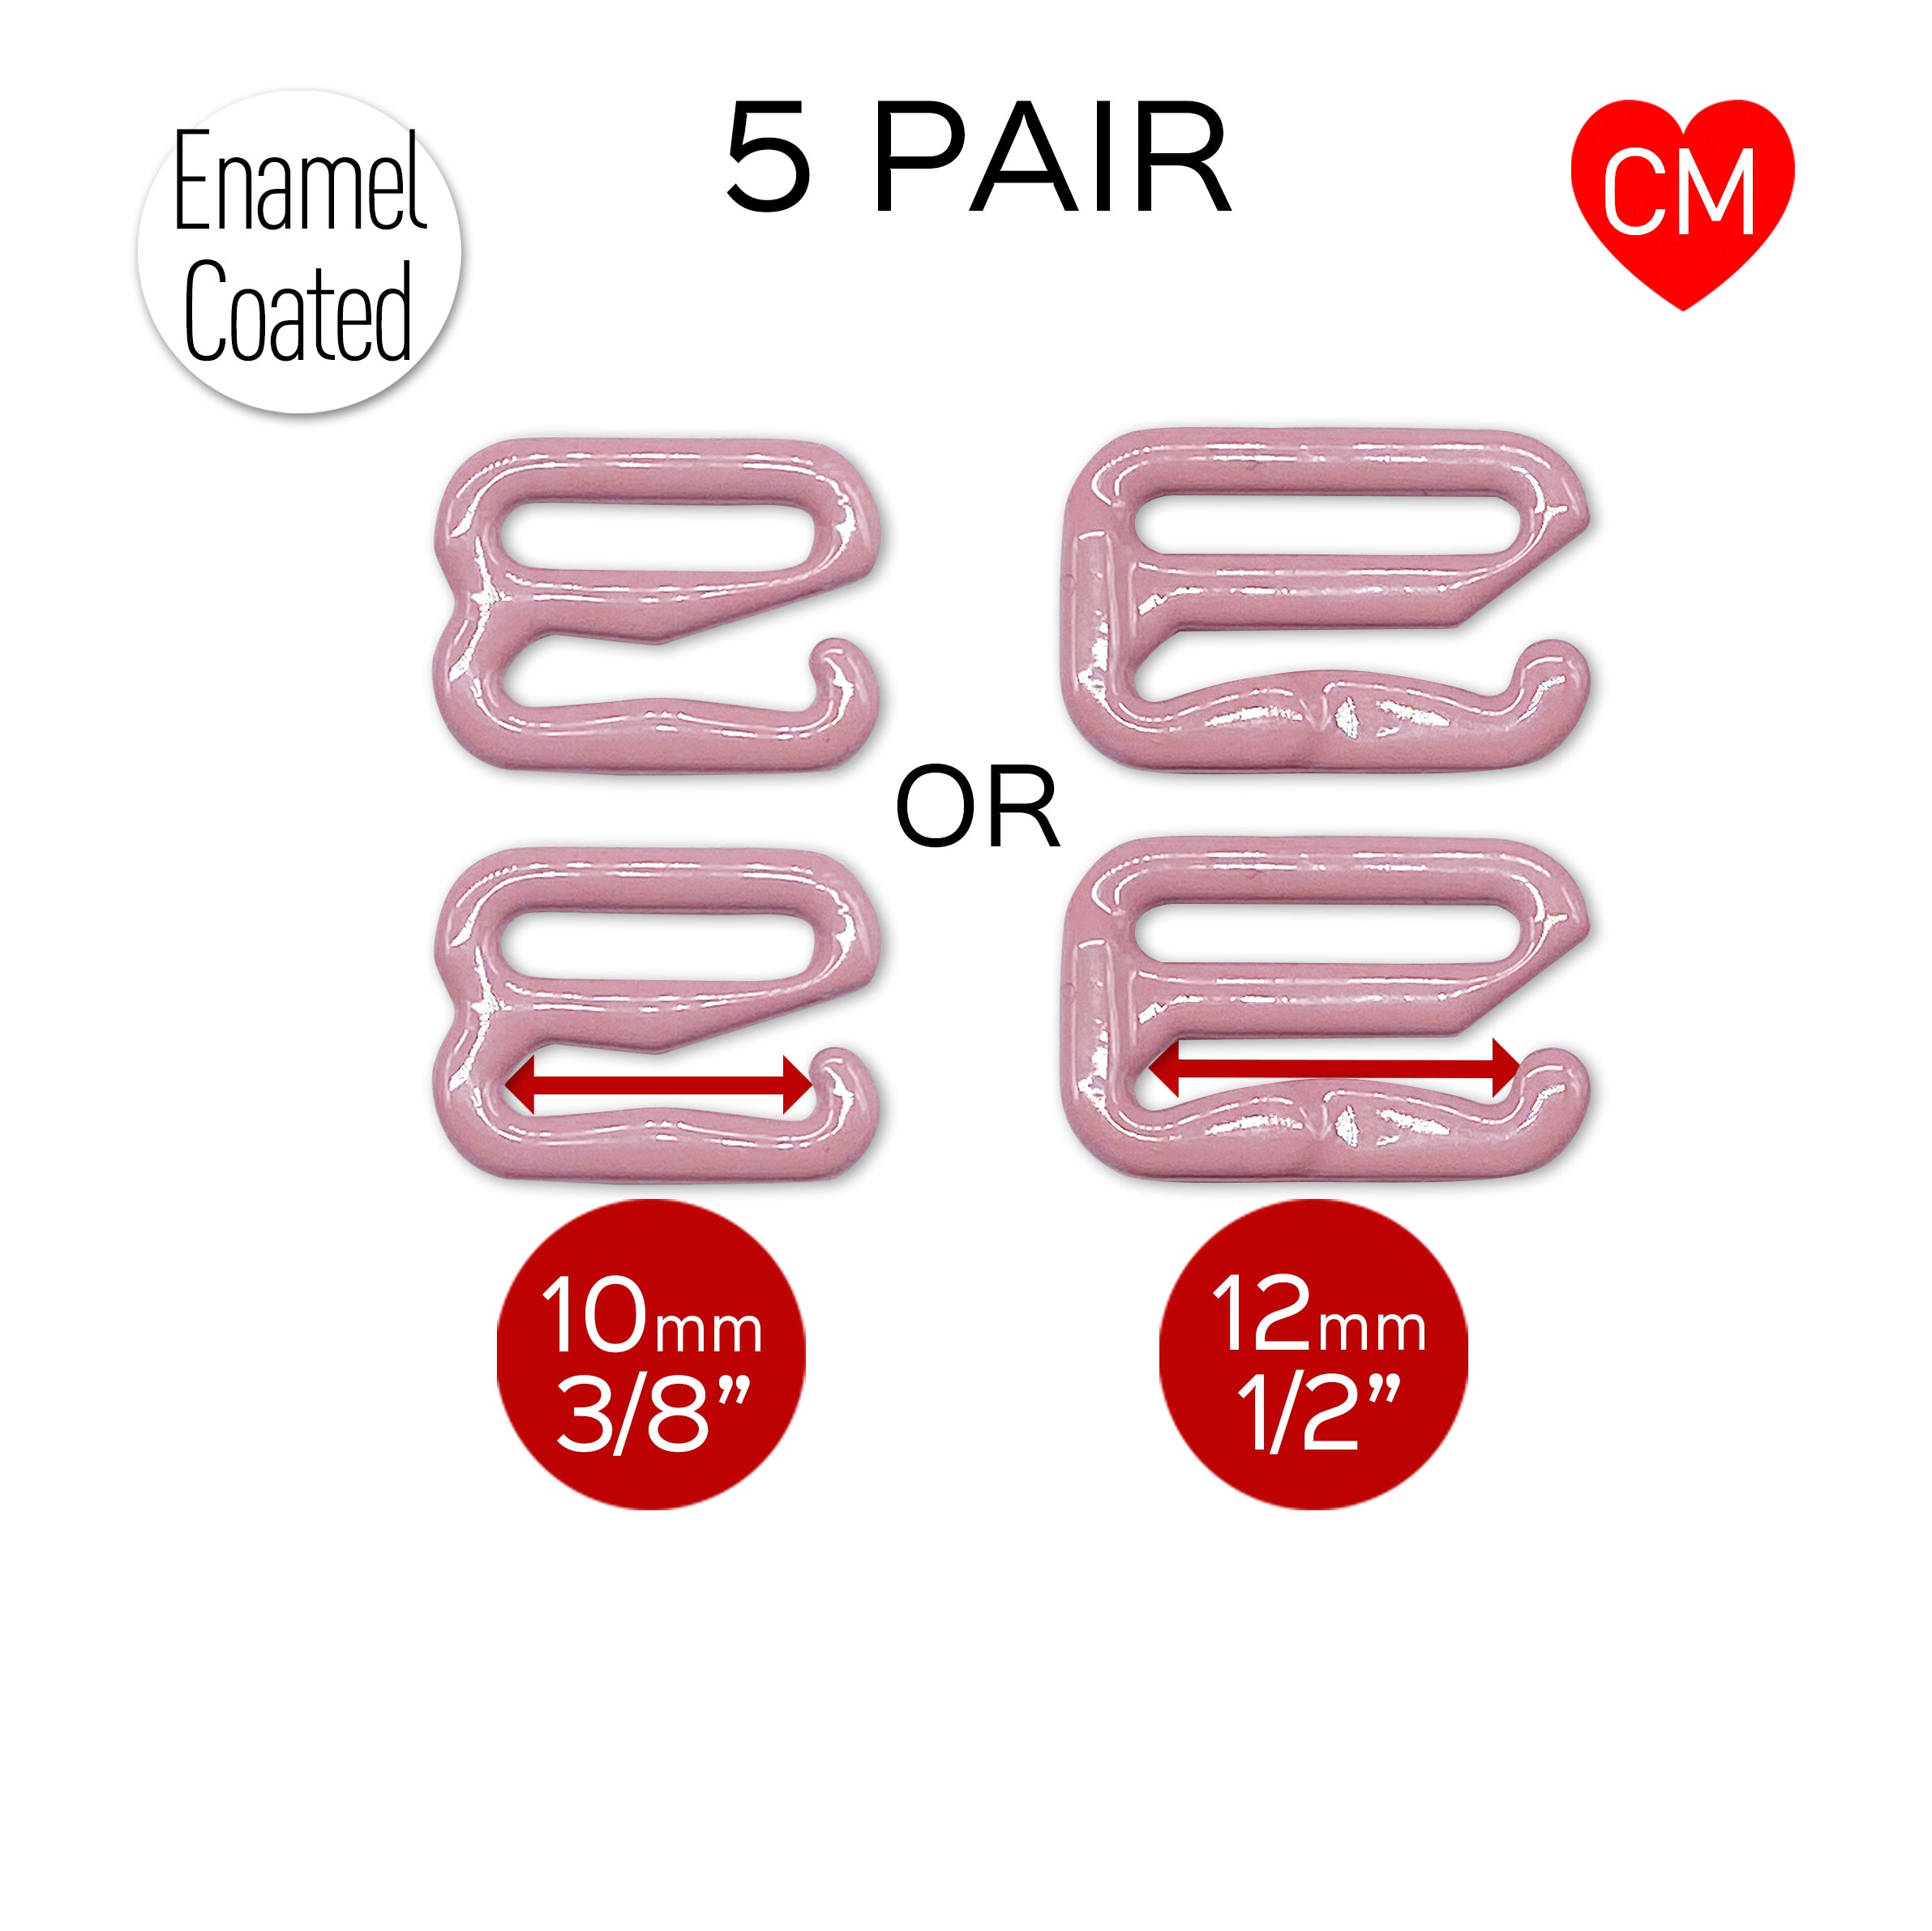 CLEARANCE- 5 Pair of Bra Strap Slider G Hooks in Enamel Coated Dusty Pink for Swimwear or Bra making- 3/8" or 1/2" - Stitch Love Studio